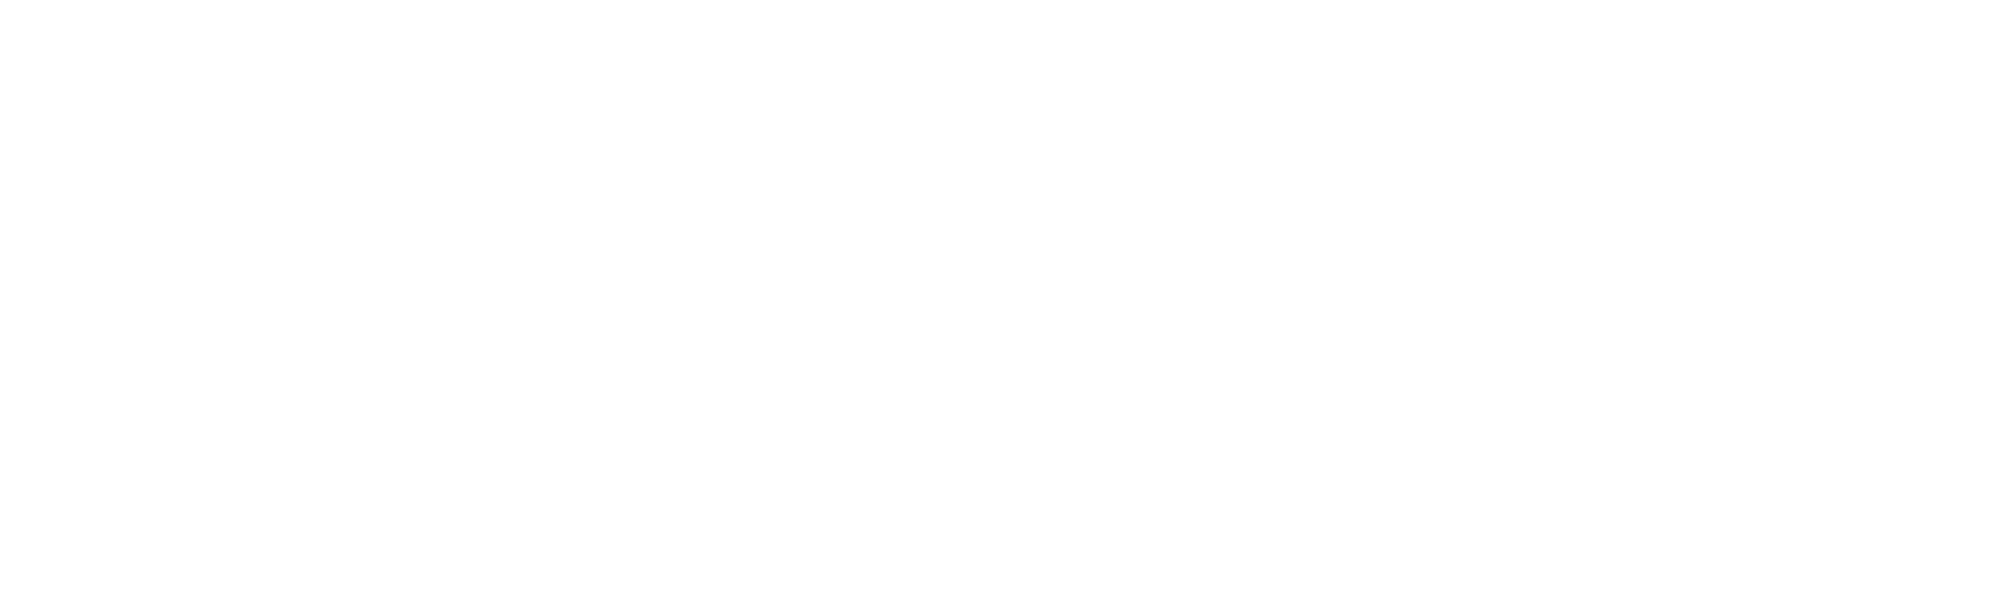 Chris Sloan Main Logo